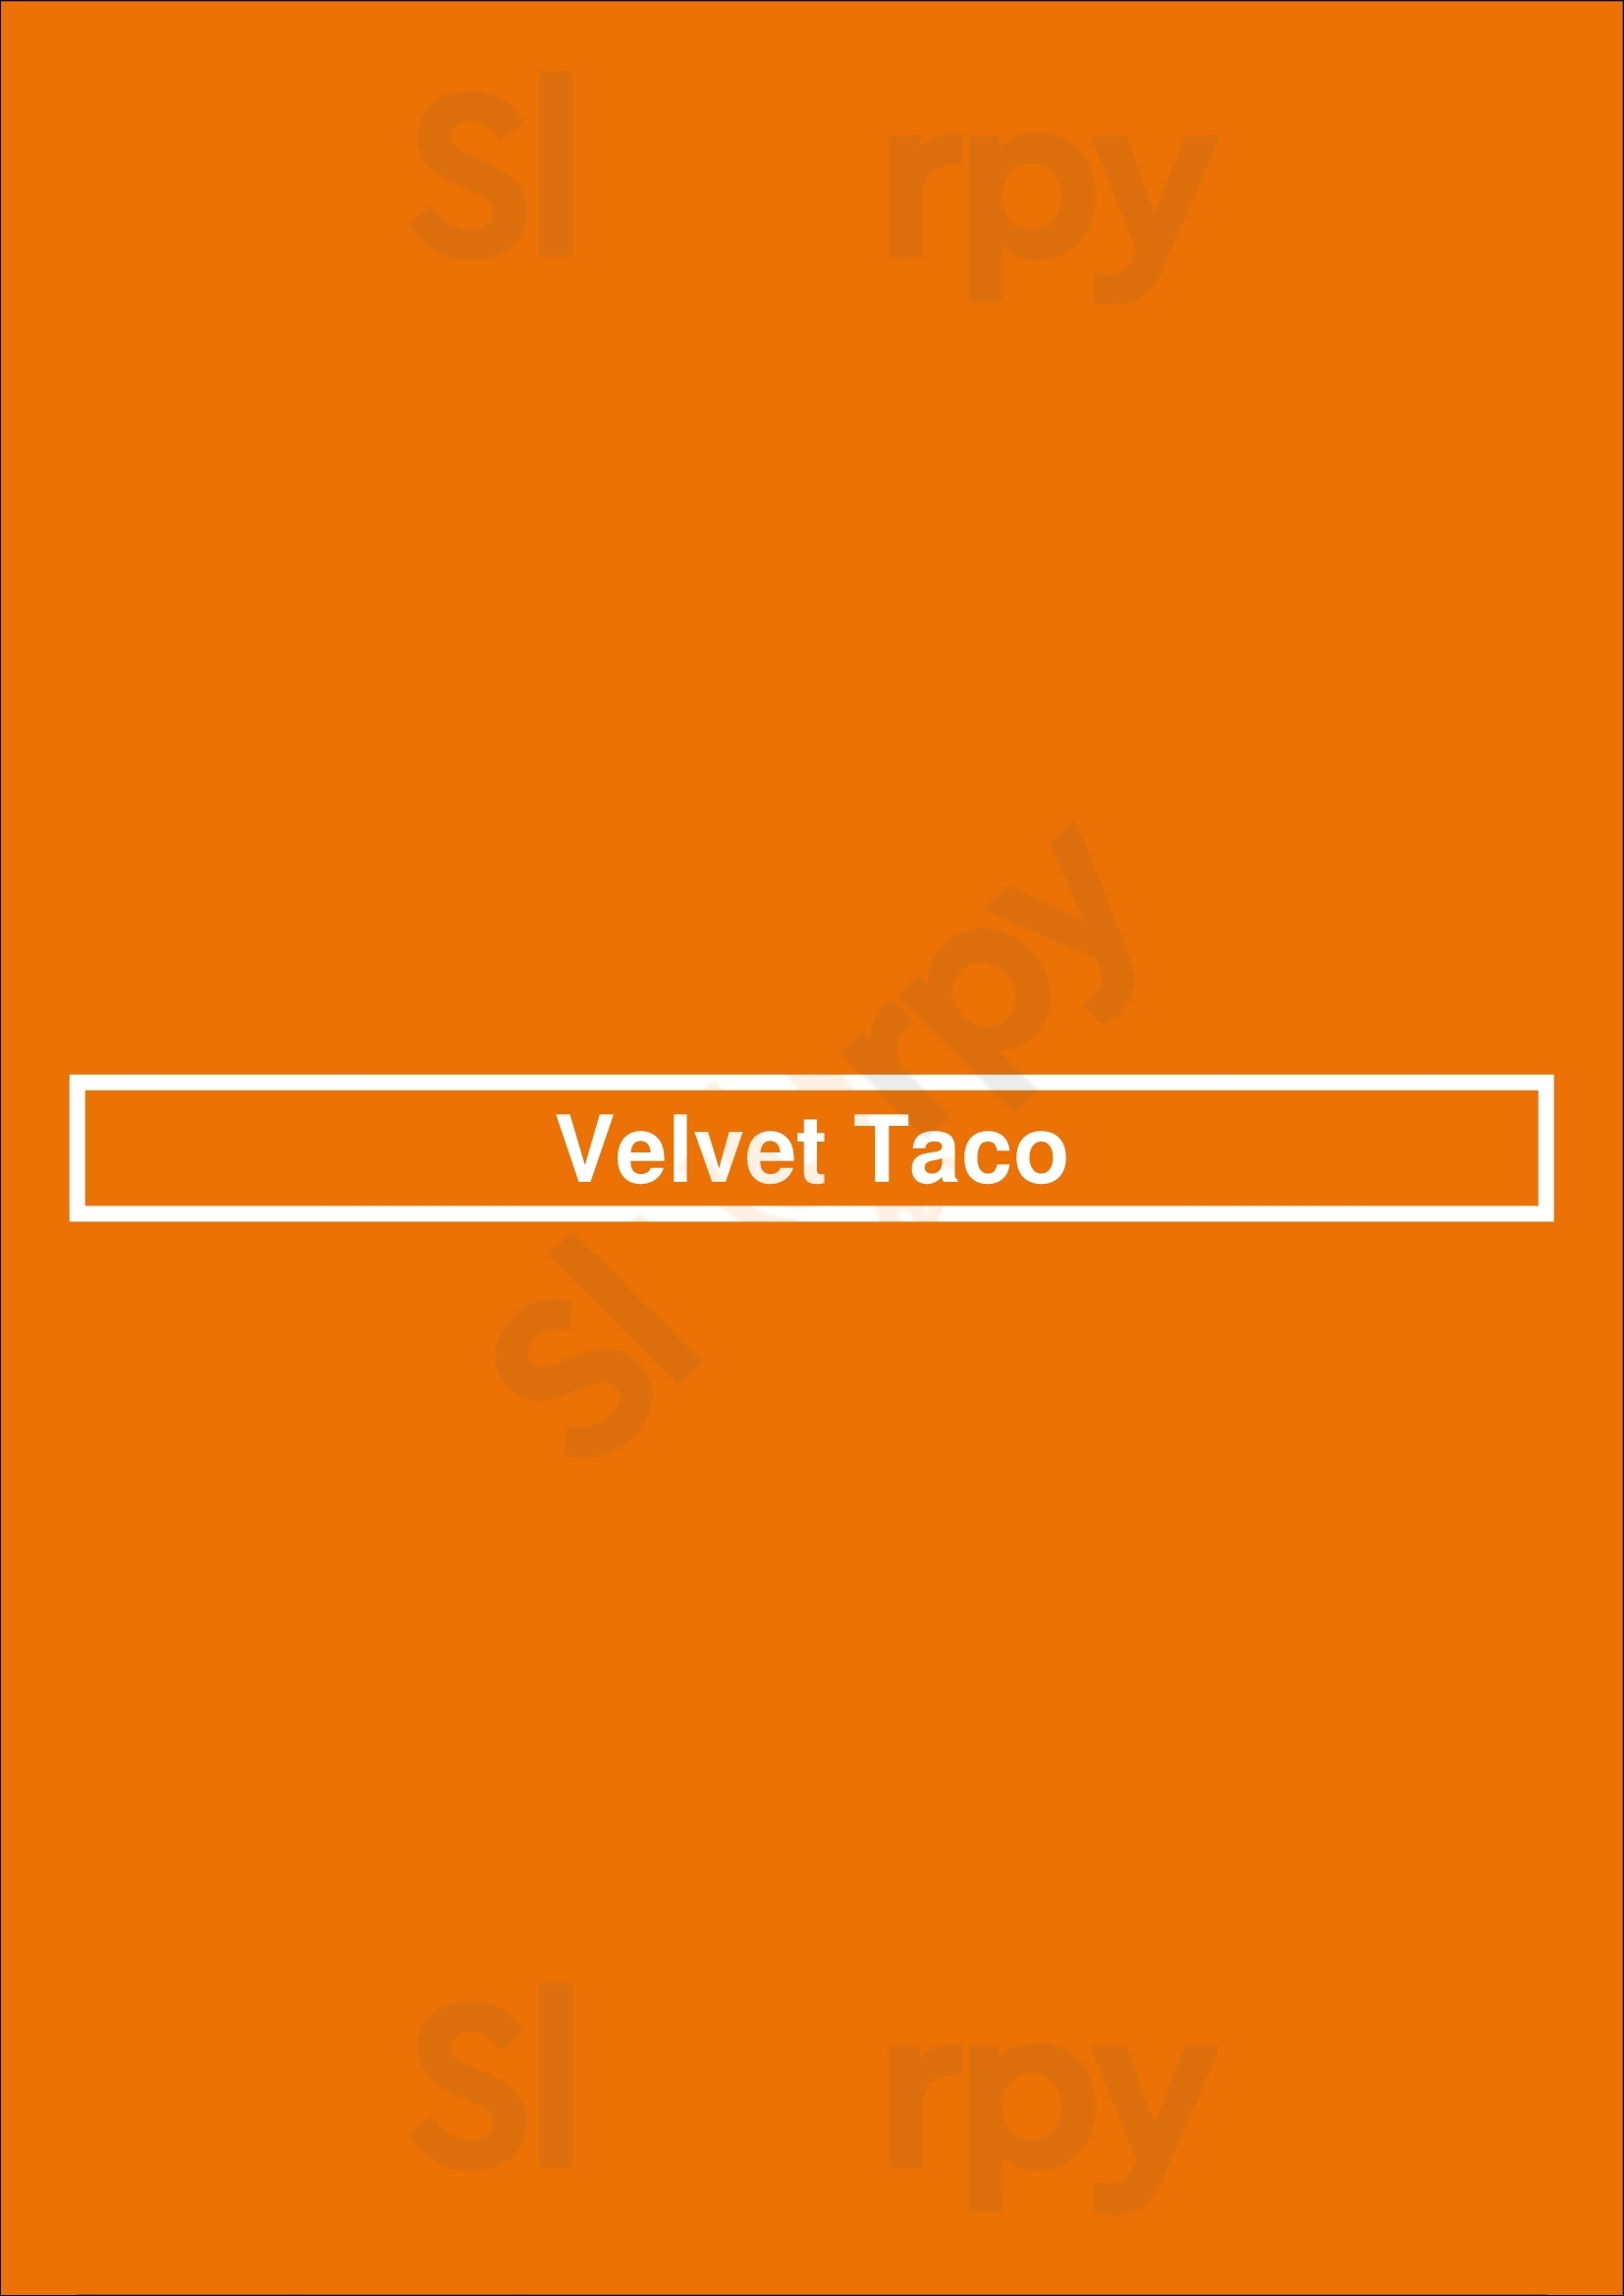 Velvet Taco Houston Menu - 1